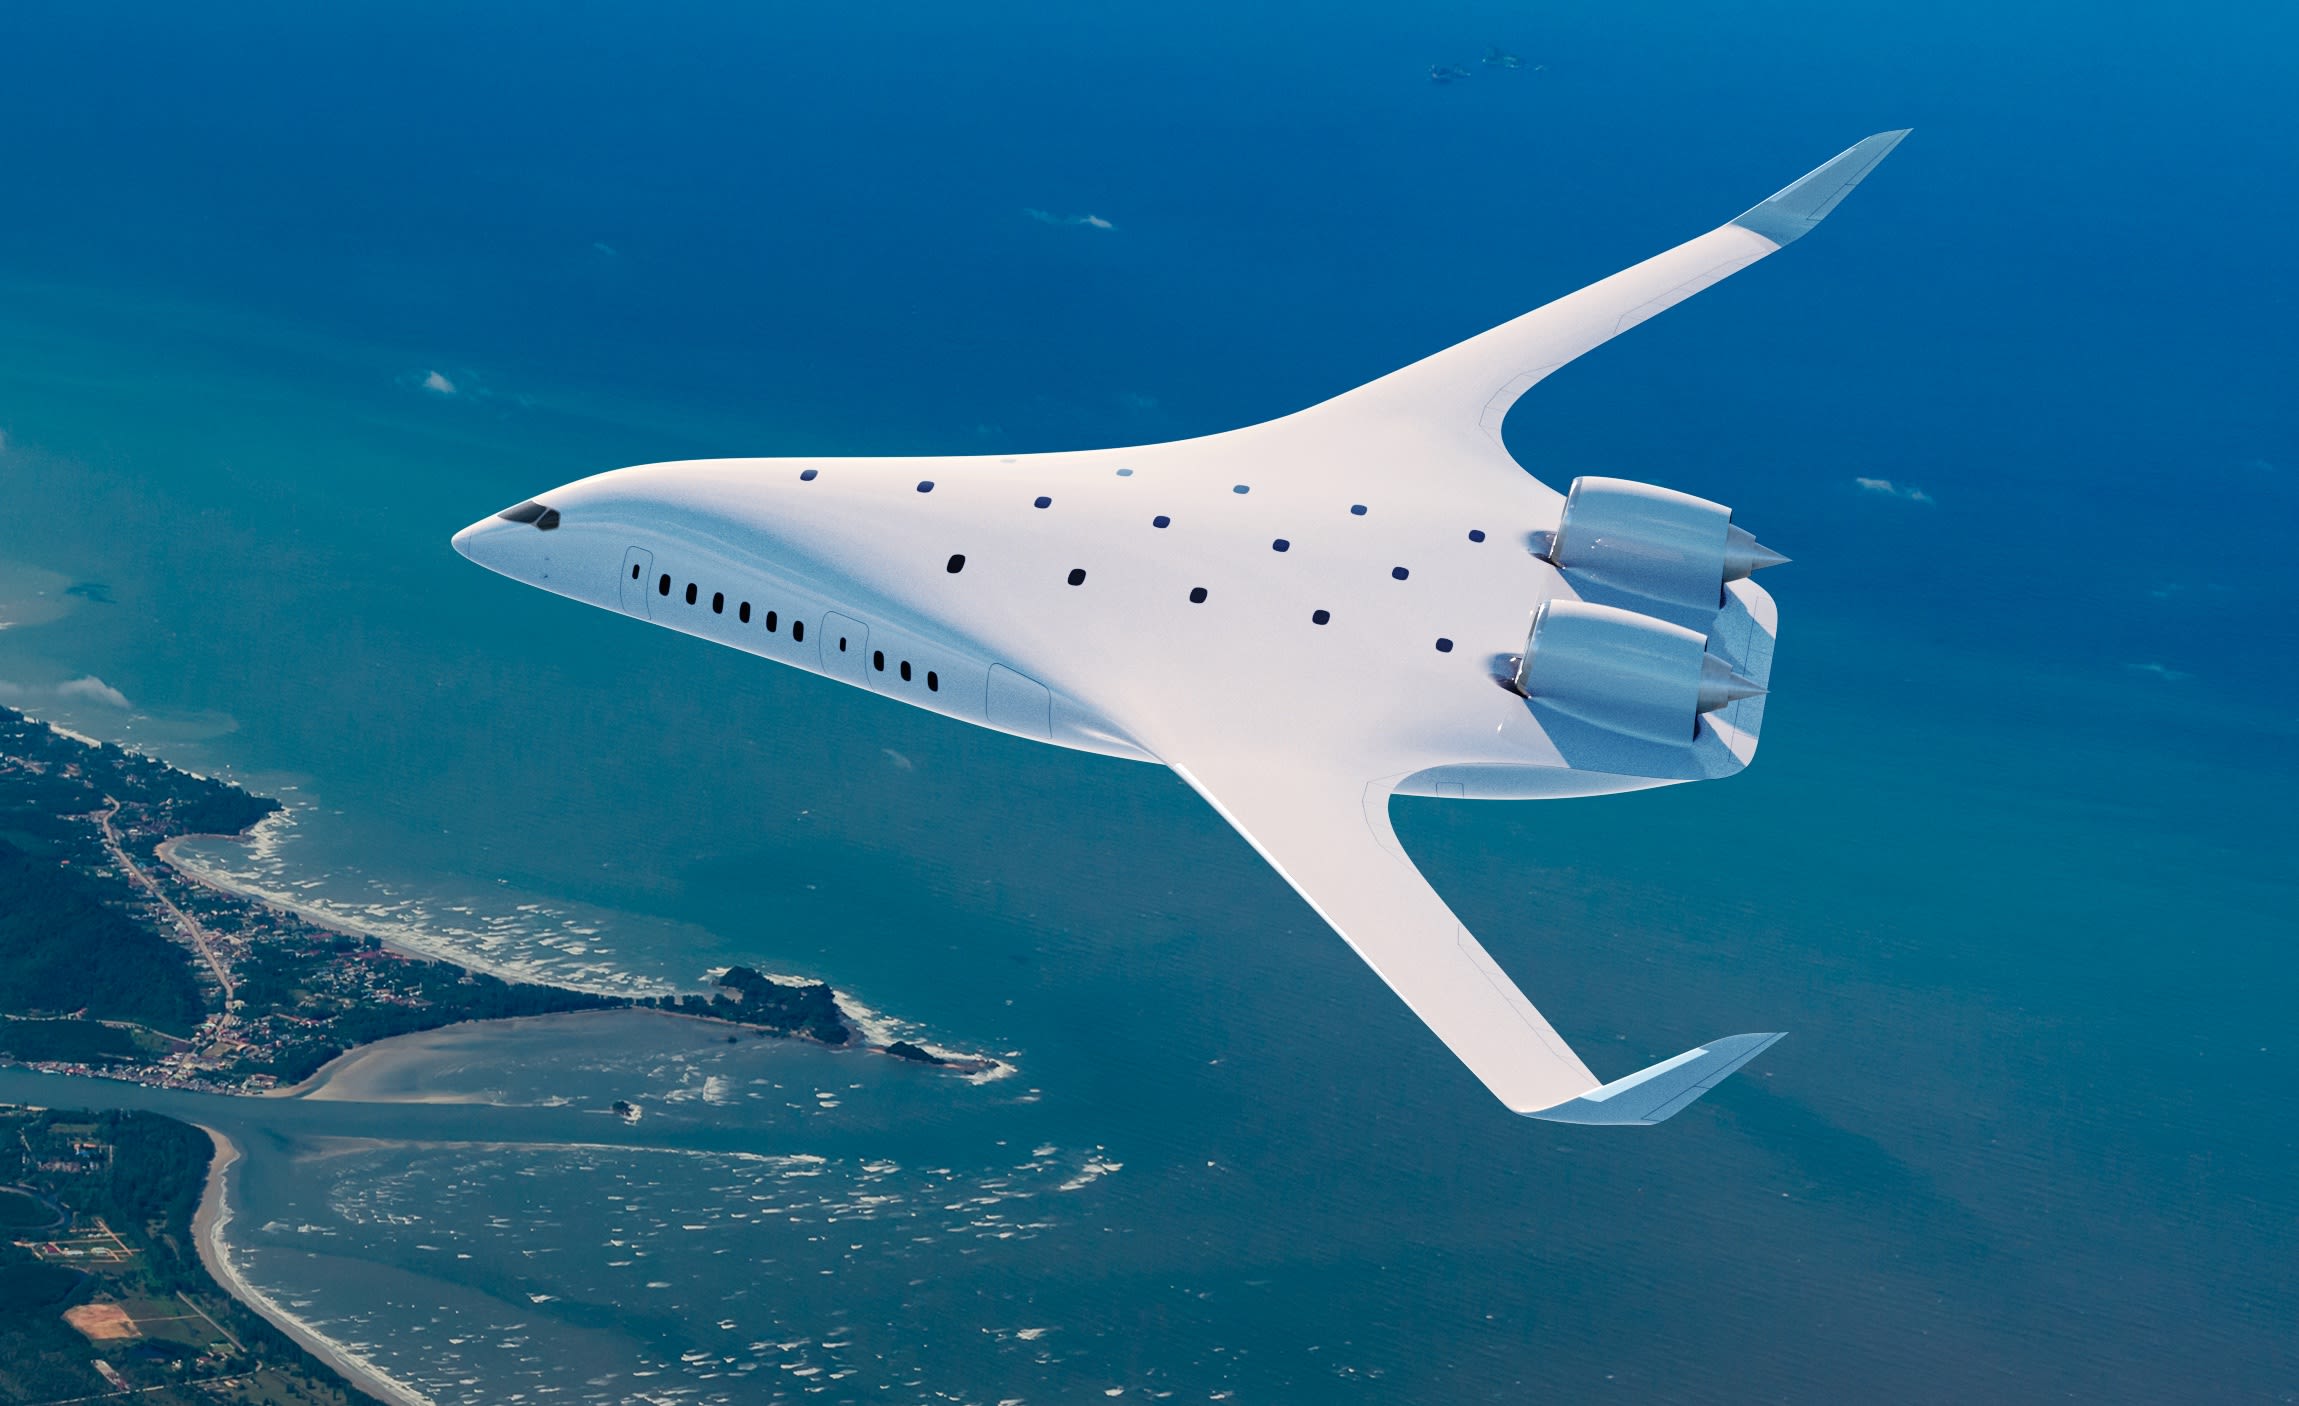 JetZero: Is this new plane design the future of aviation?